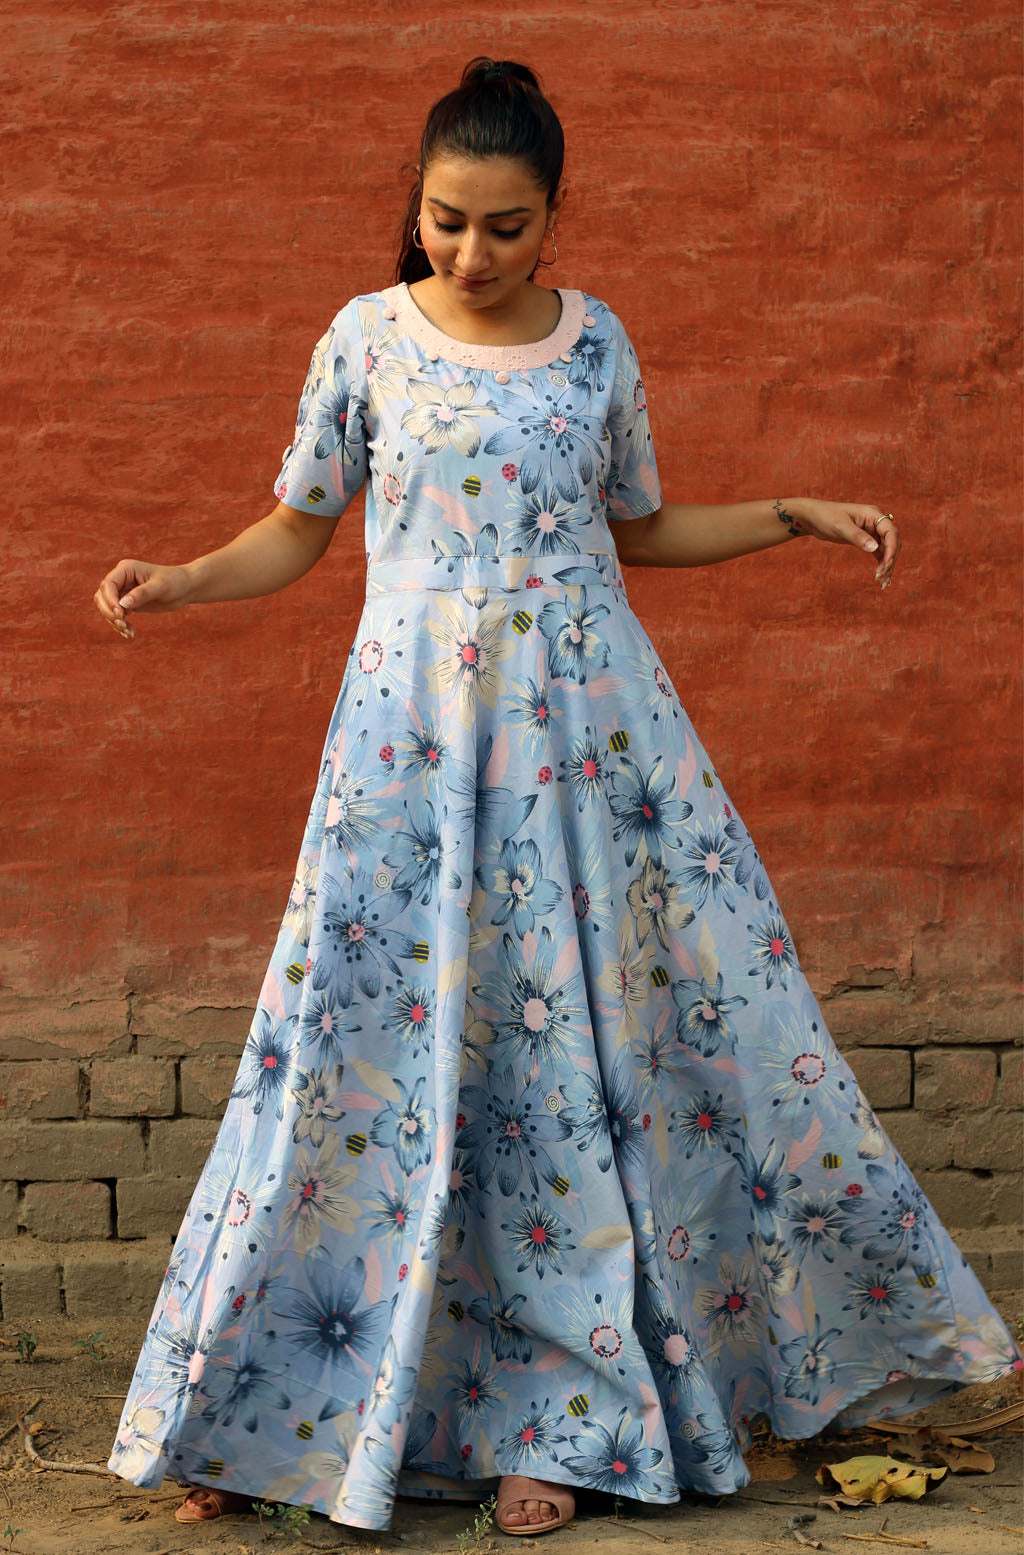 Taj Cotton Party Wear Ladies Orange Long Dress at Rs 985/piece in Jaipur |  ID: 23843434373